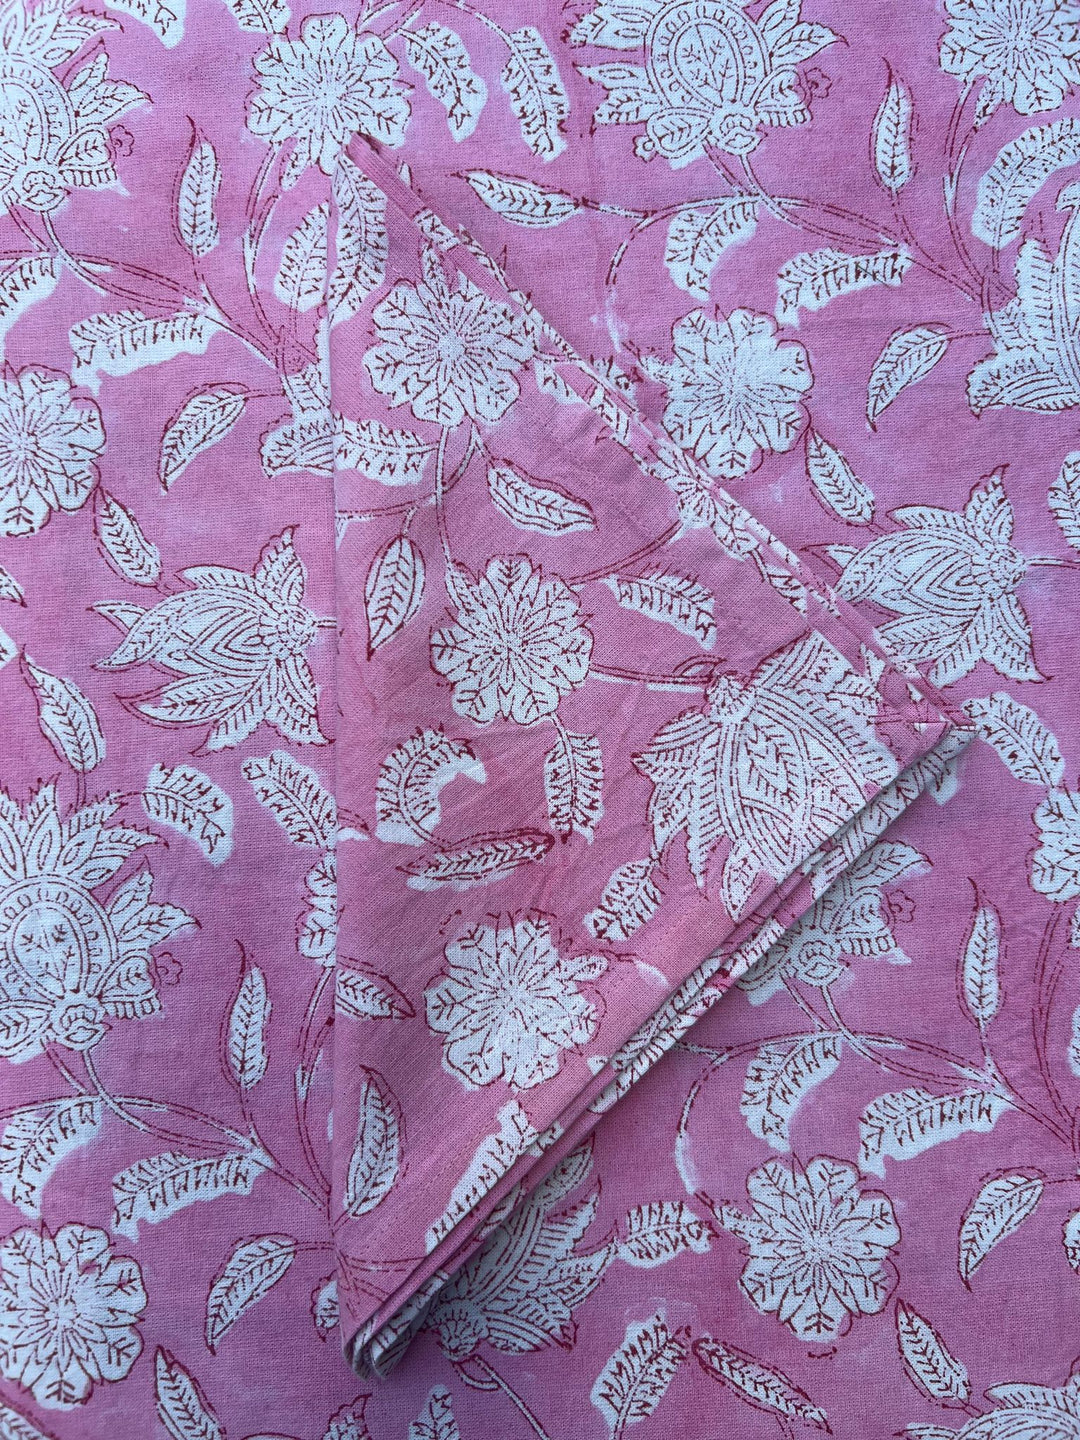 Champaca Print Napkin Set of 2 in Rani Pink